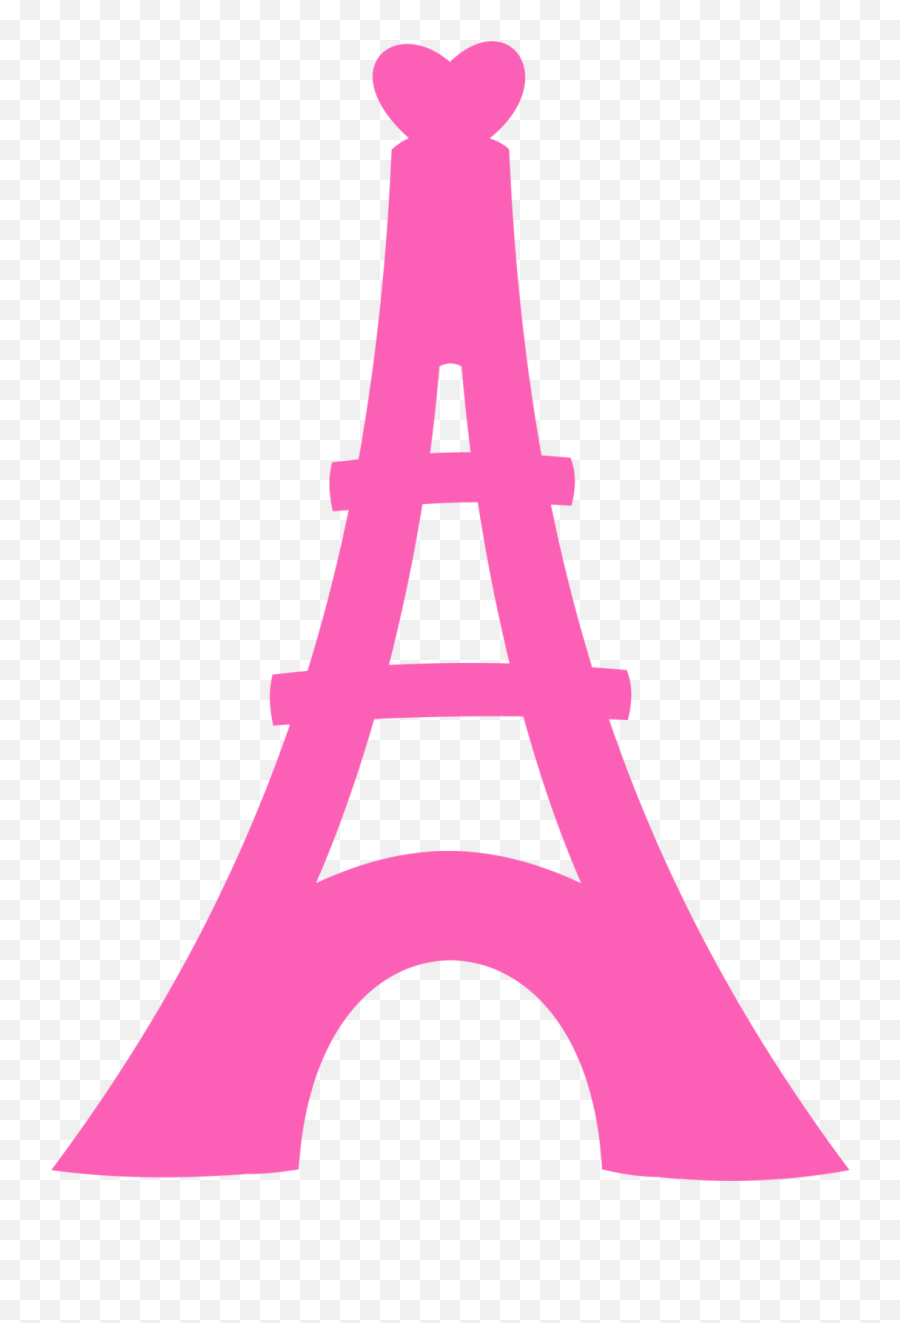 4shared - Ver Todas Las Imágenes De La Carpeta Png Torre Eiffel Fancy Nancy,Torre Eiffel Png